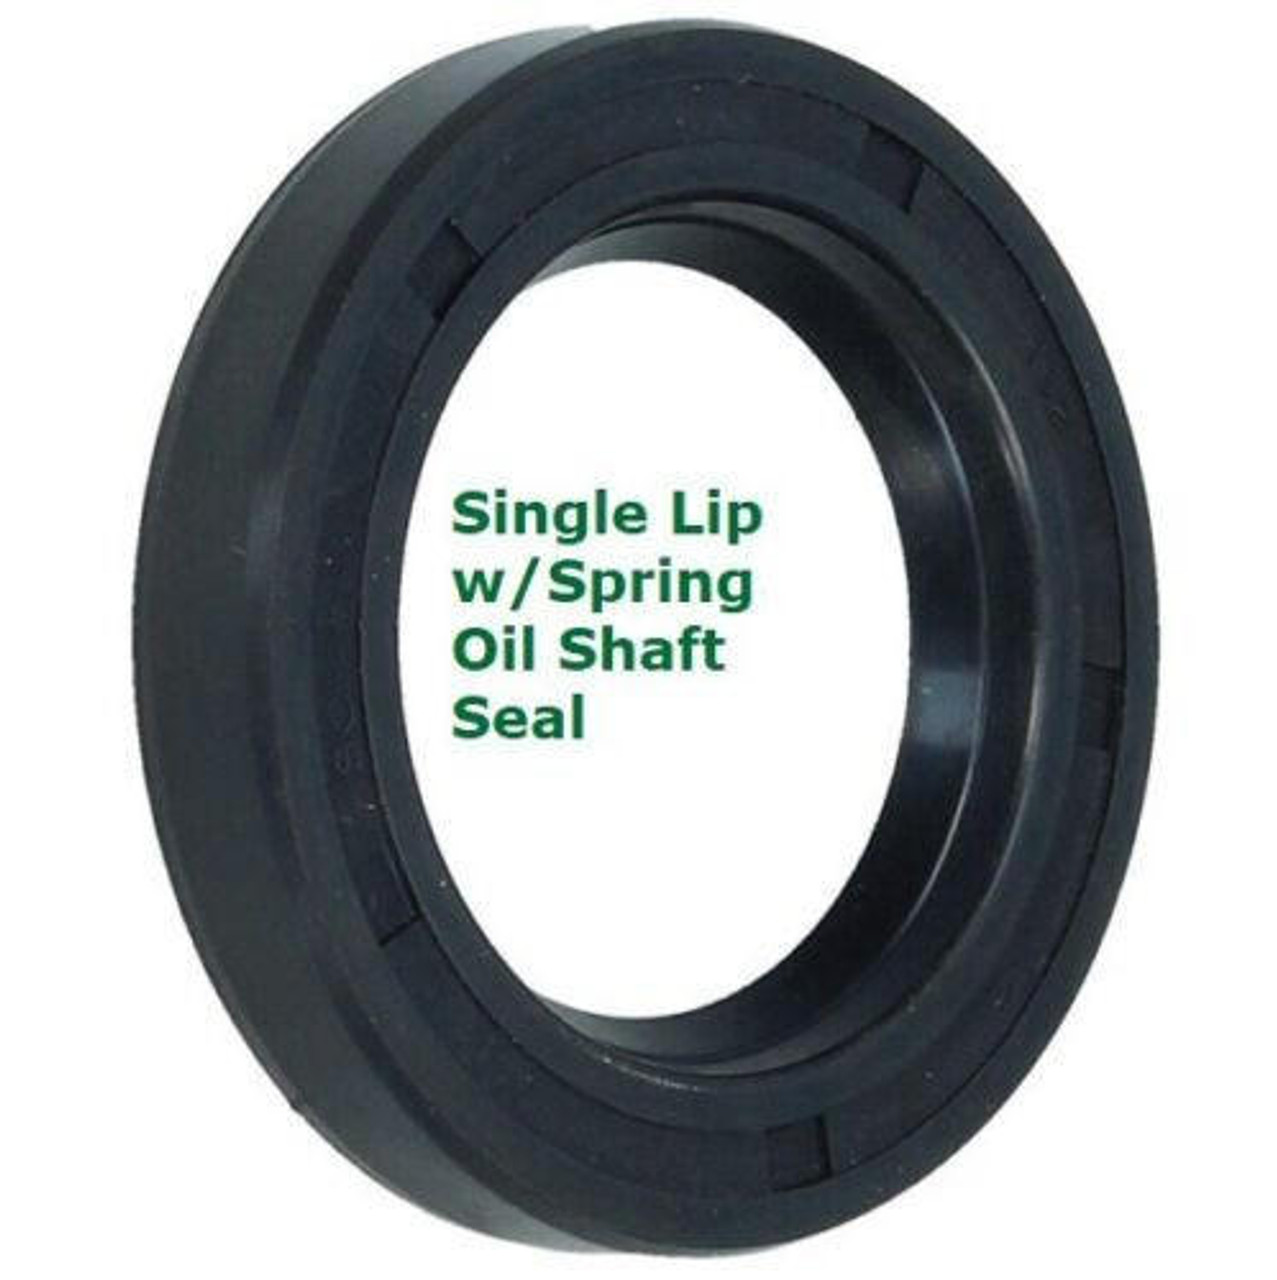 Metric Oil Shaft Seal 180 x 220 x 16mm   Single Lip   Price for 1 pc